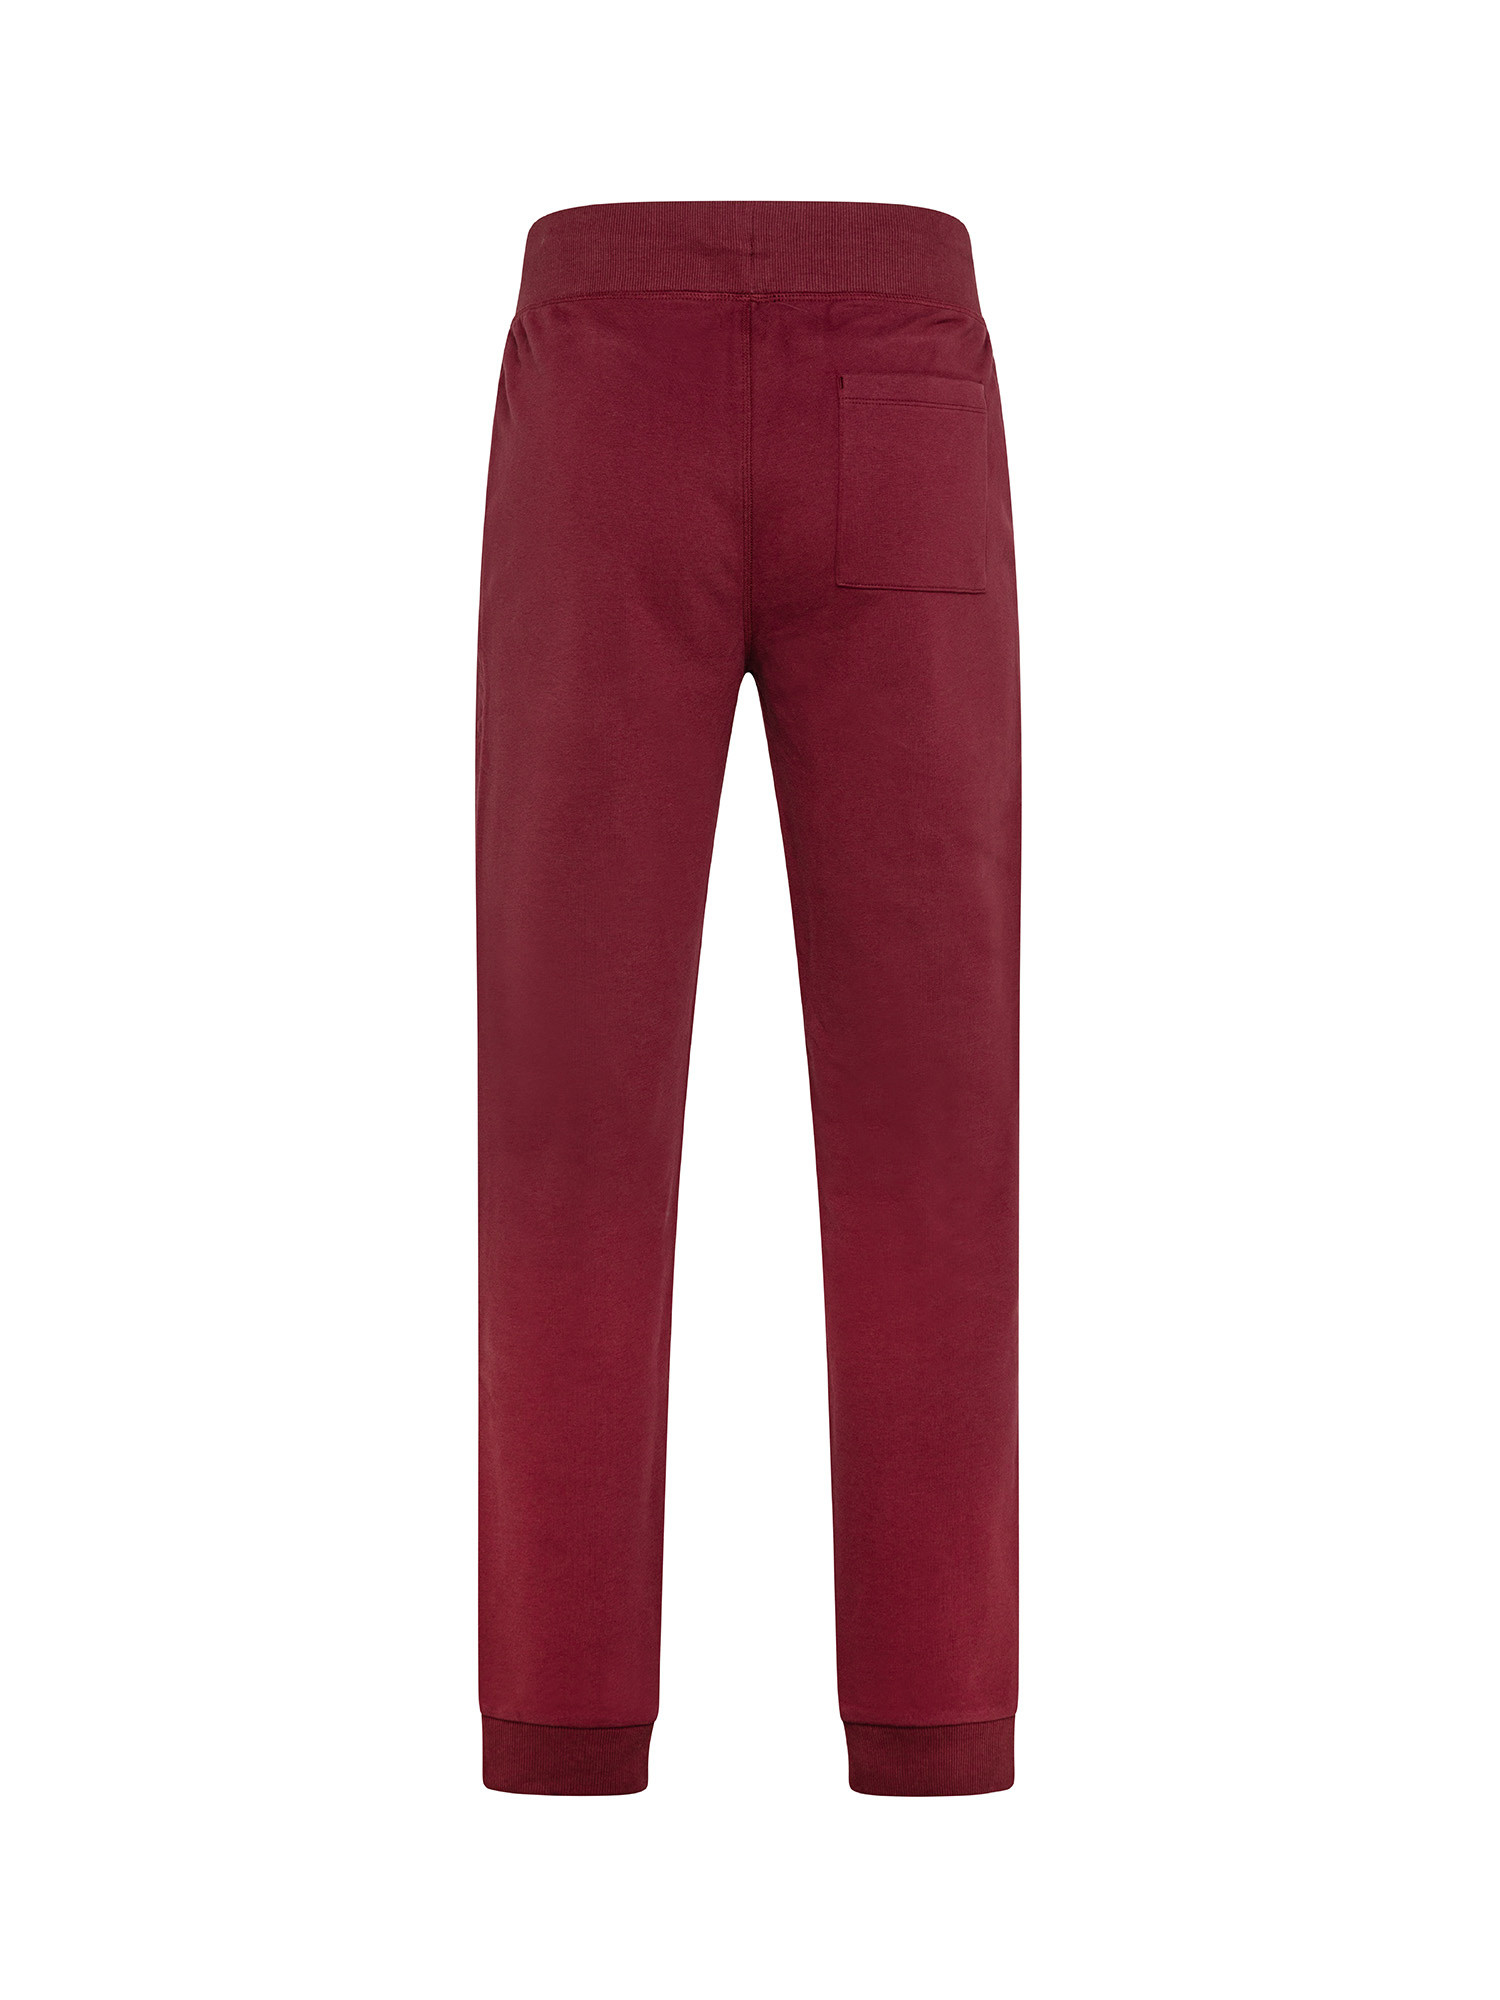 JCT - Pantalone soft touch cinque tasche, Rosso bordeaux, large image number 1